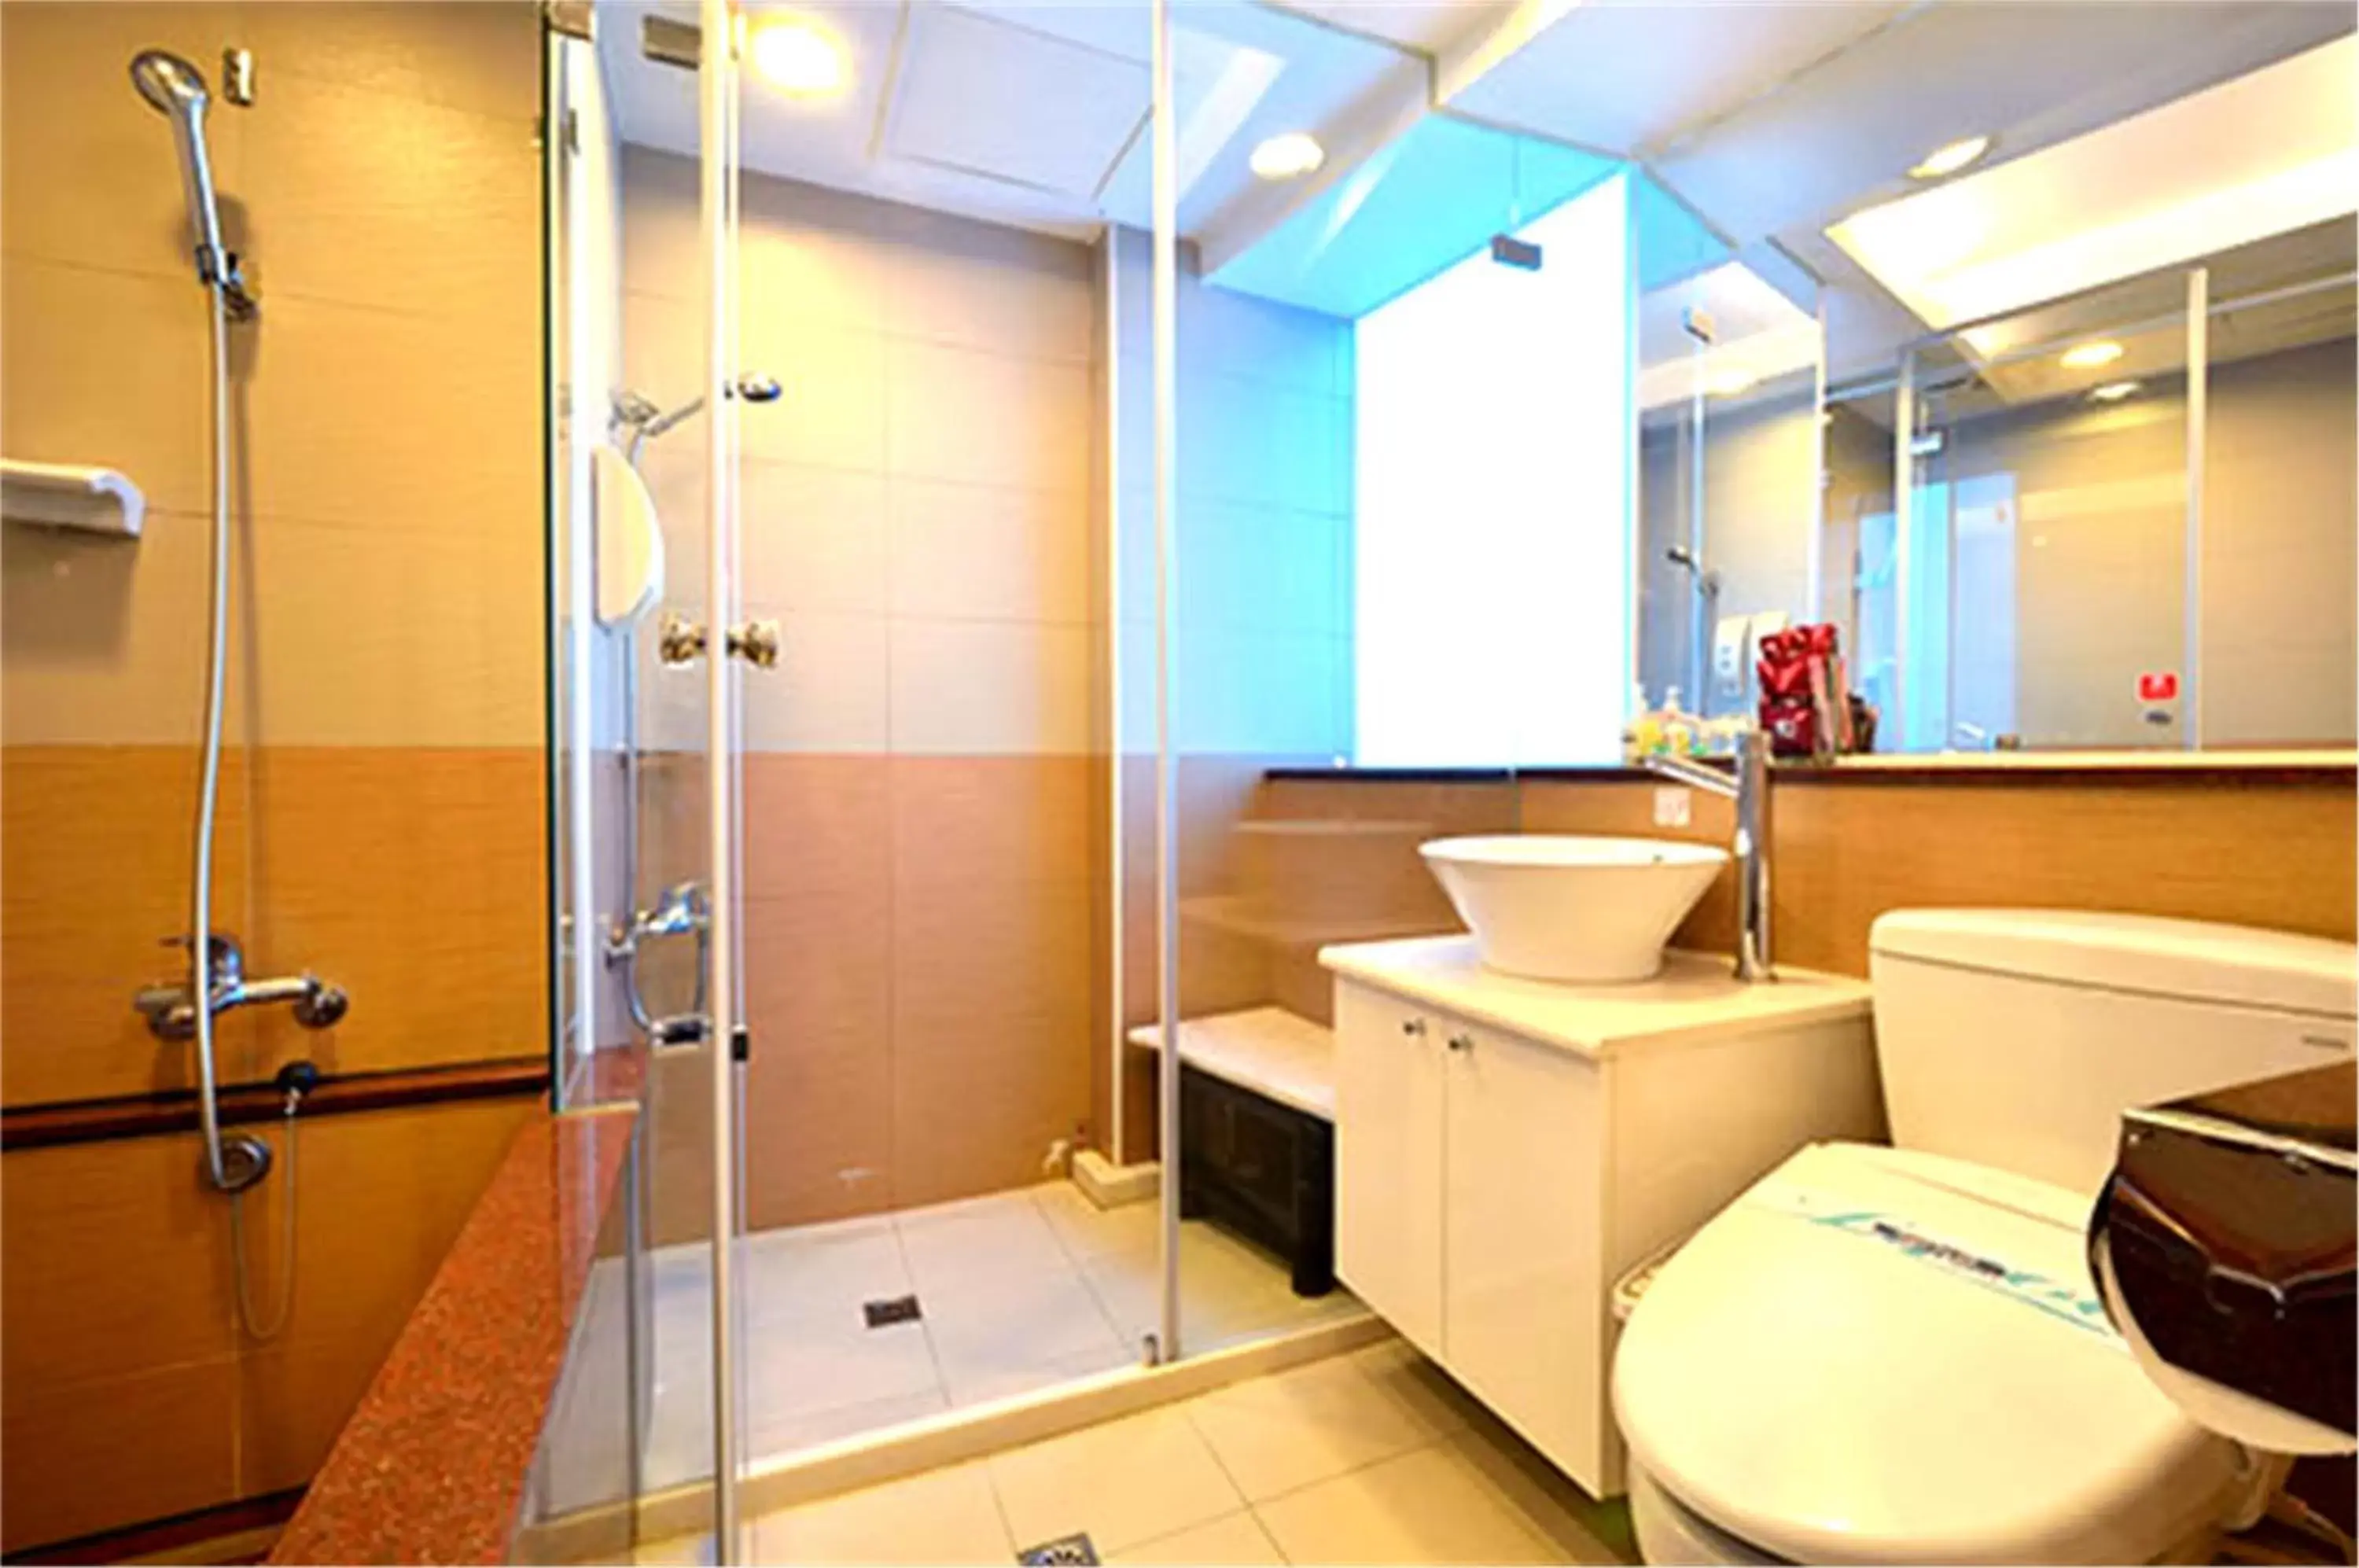 Toilet, Bathroom in Yomi Hotel - ShuangLian MRT